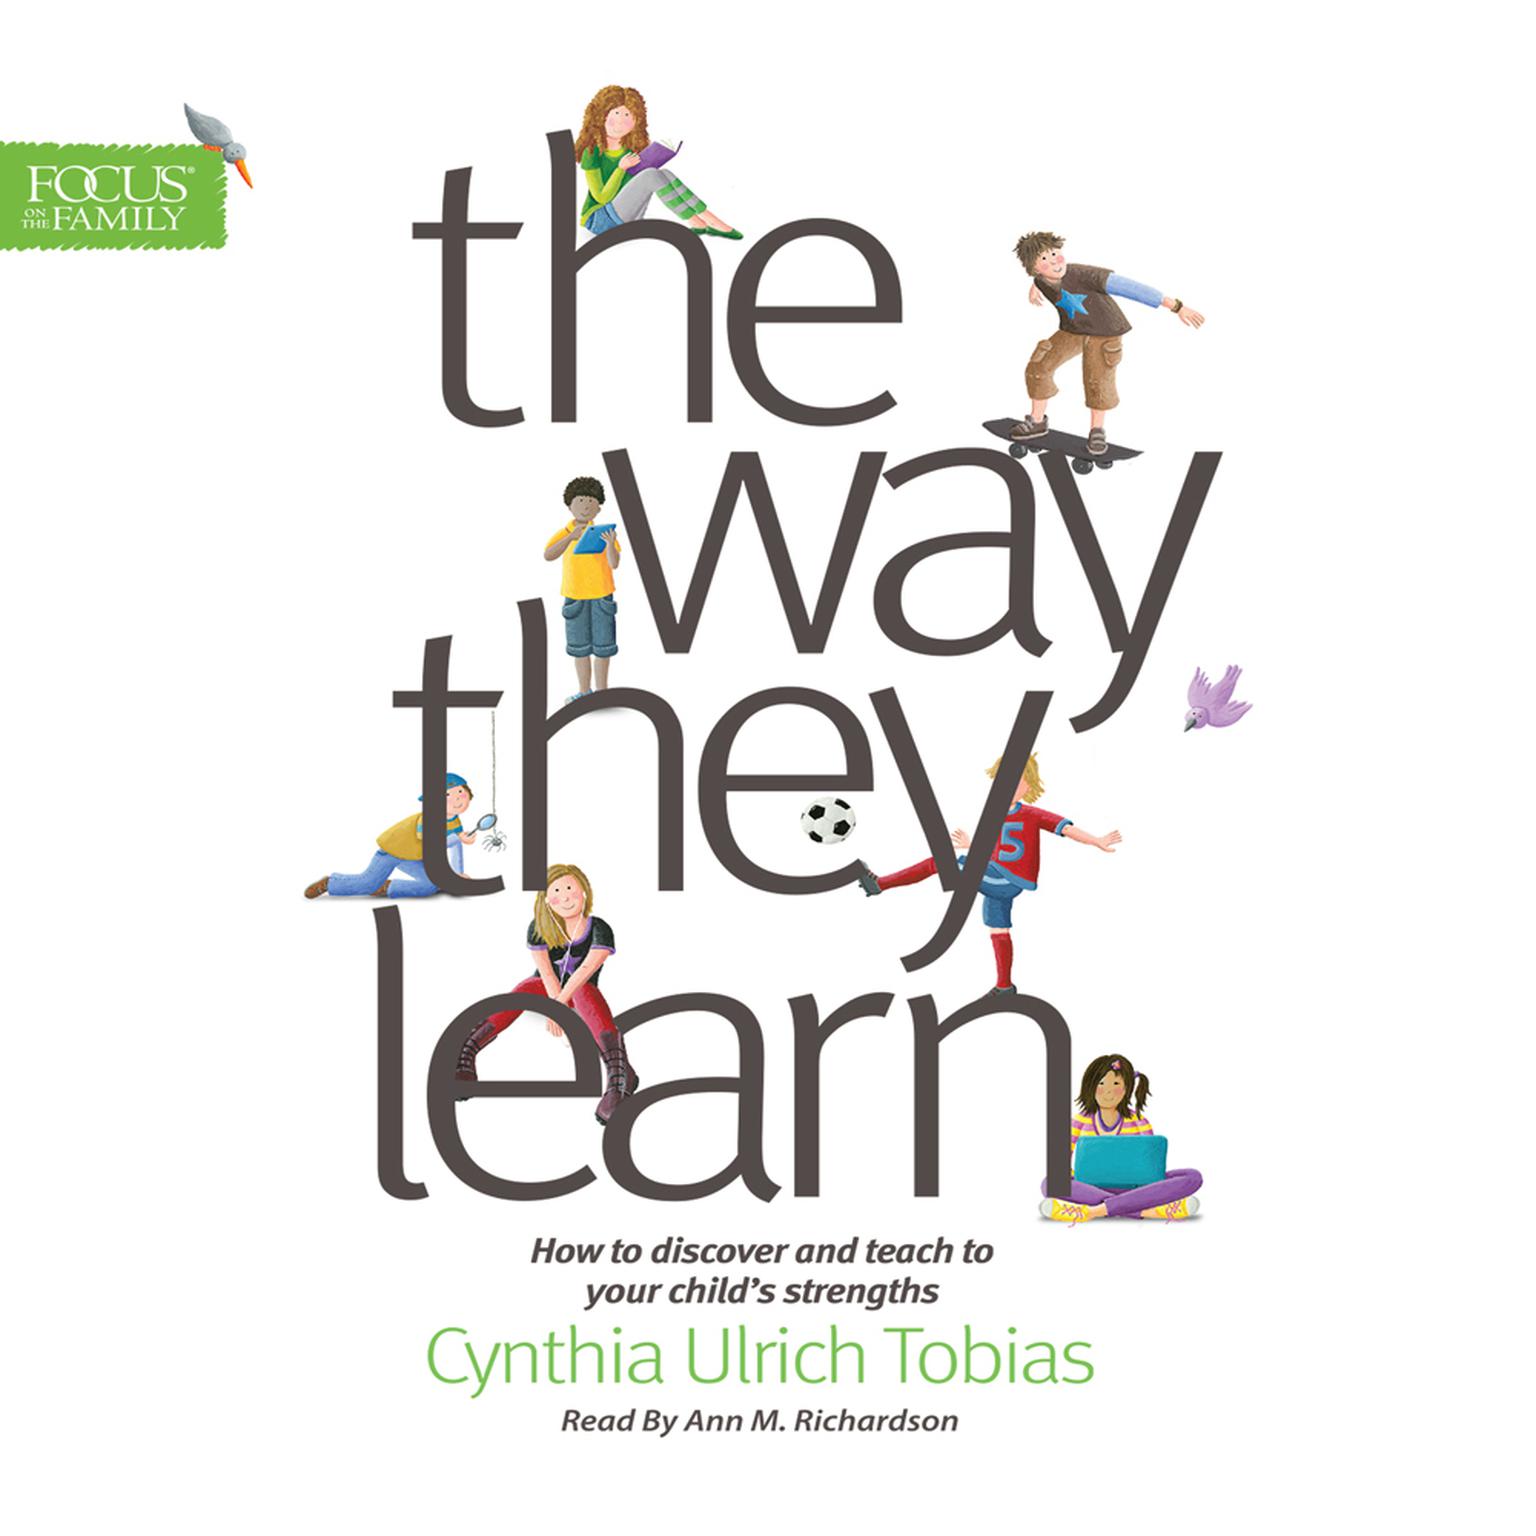 Way They Learn Audiobook, by Cynthia Ulrich Tobias